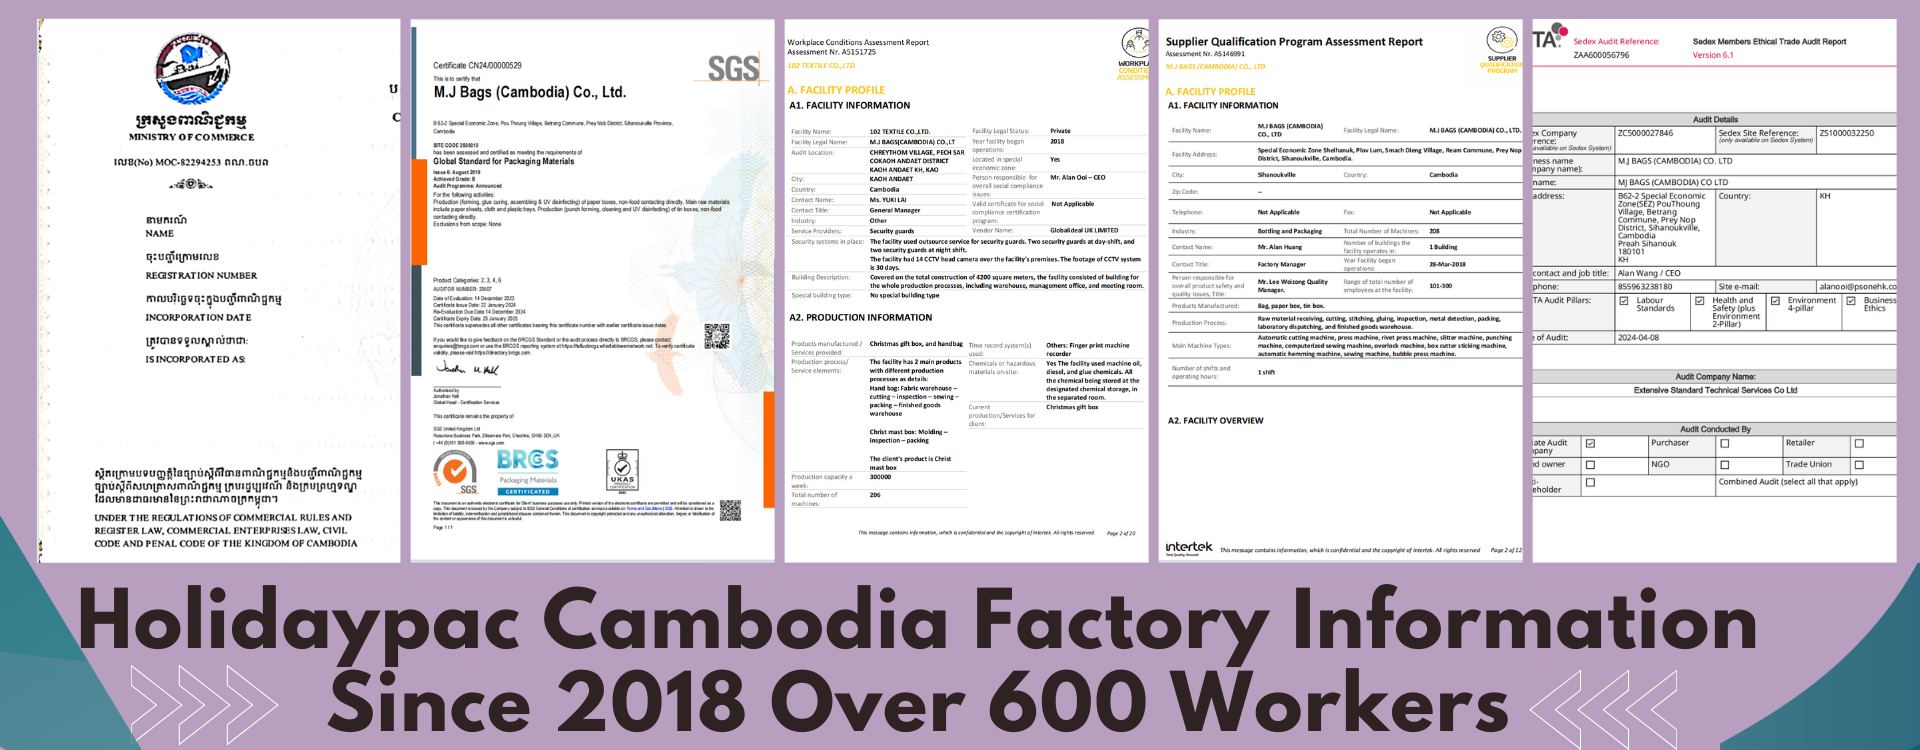 Holidaypac Cambodia Factory Information